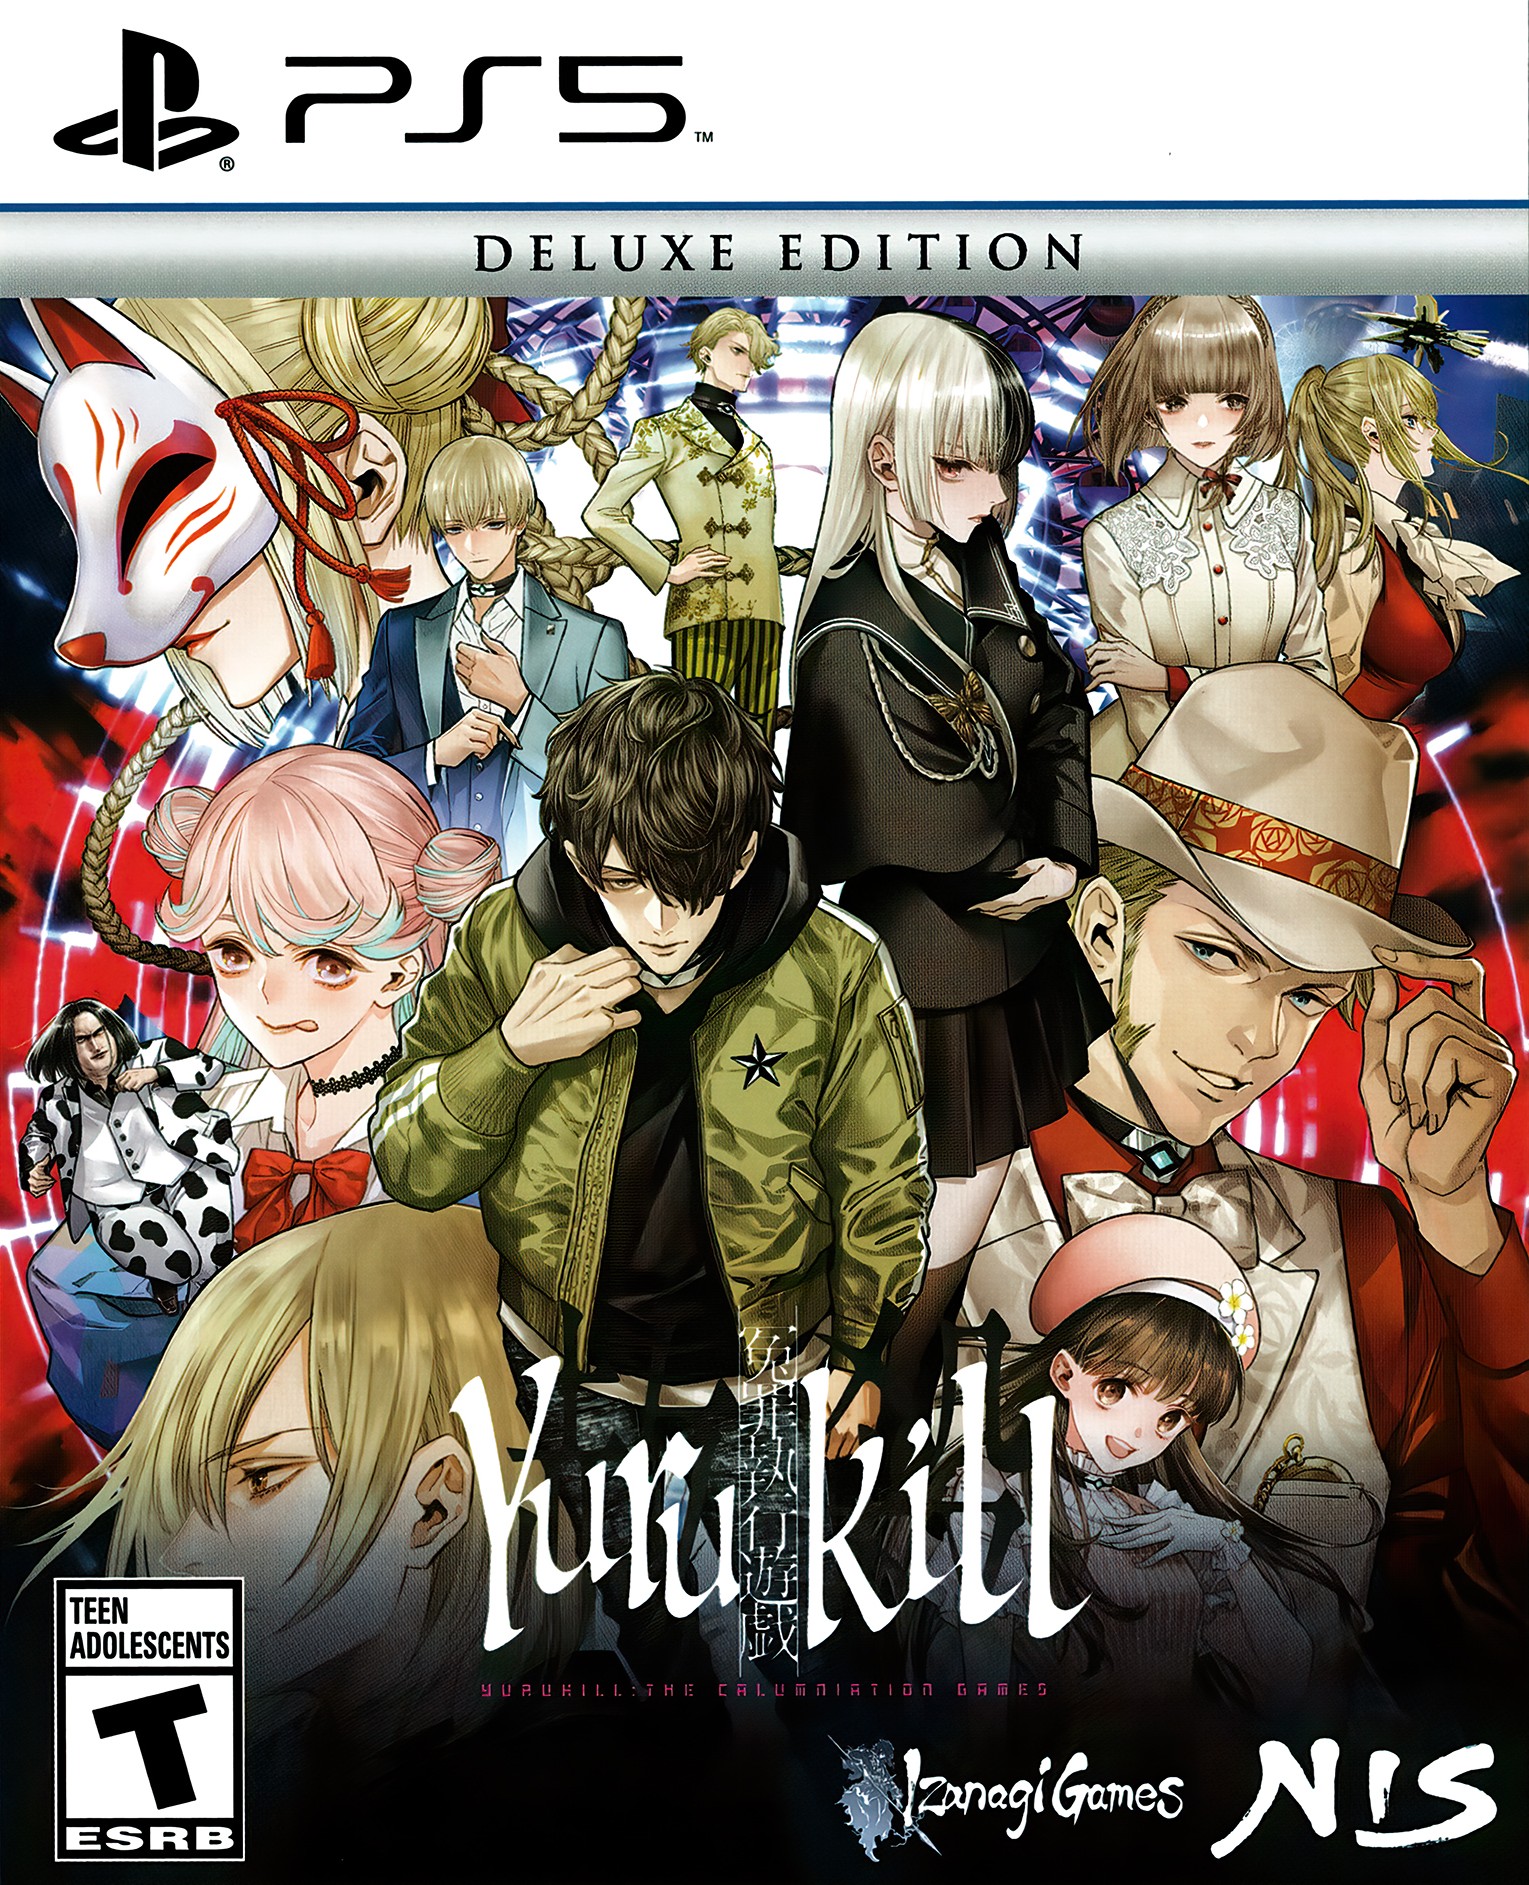 'YuruKill: The Calumniation Games - Deluxe Edition'